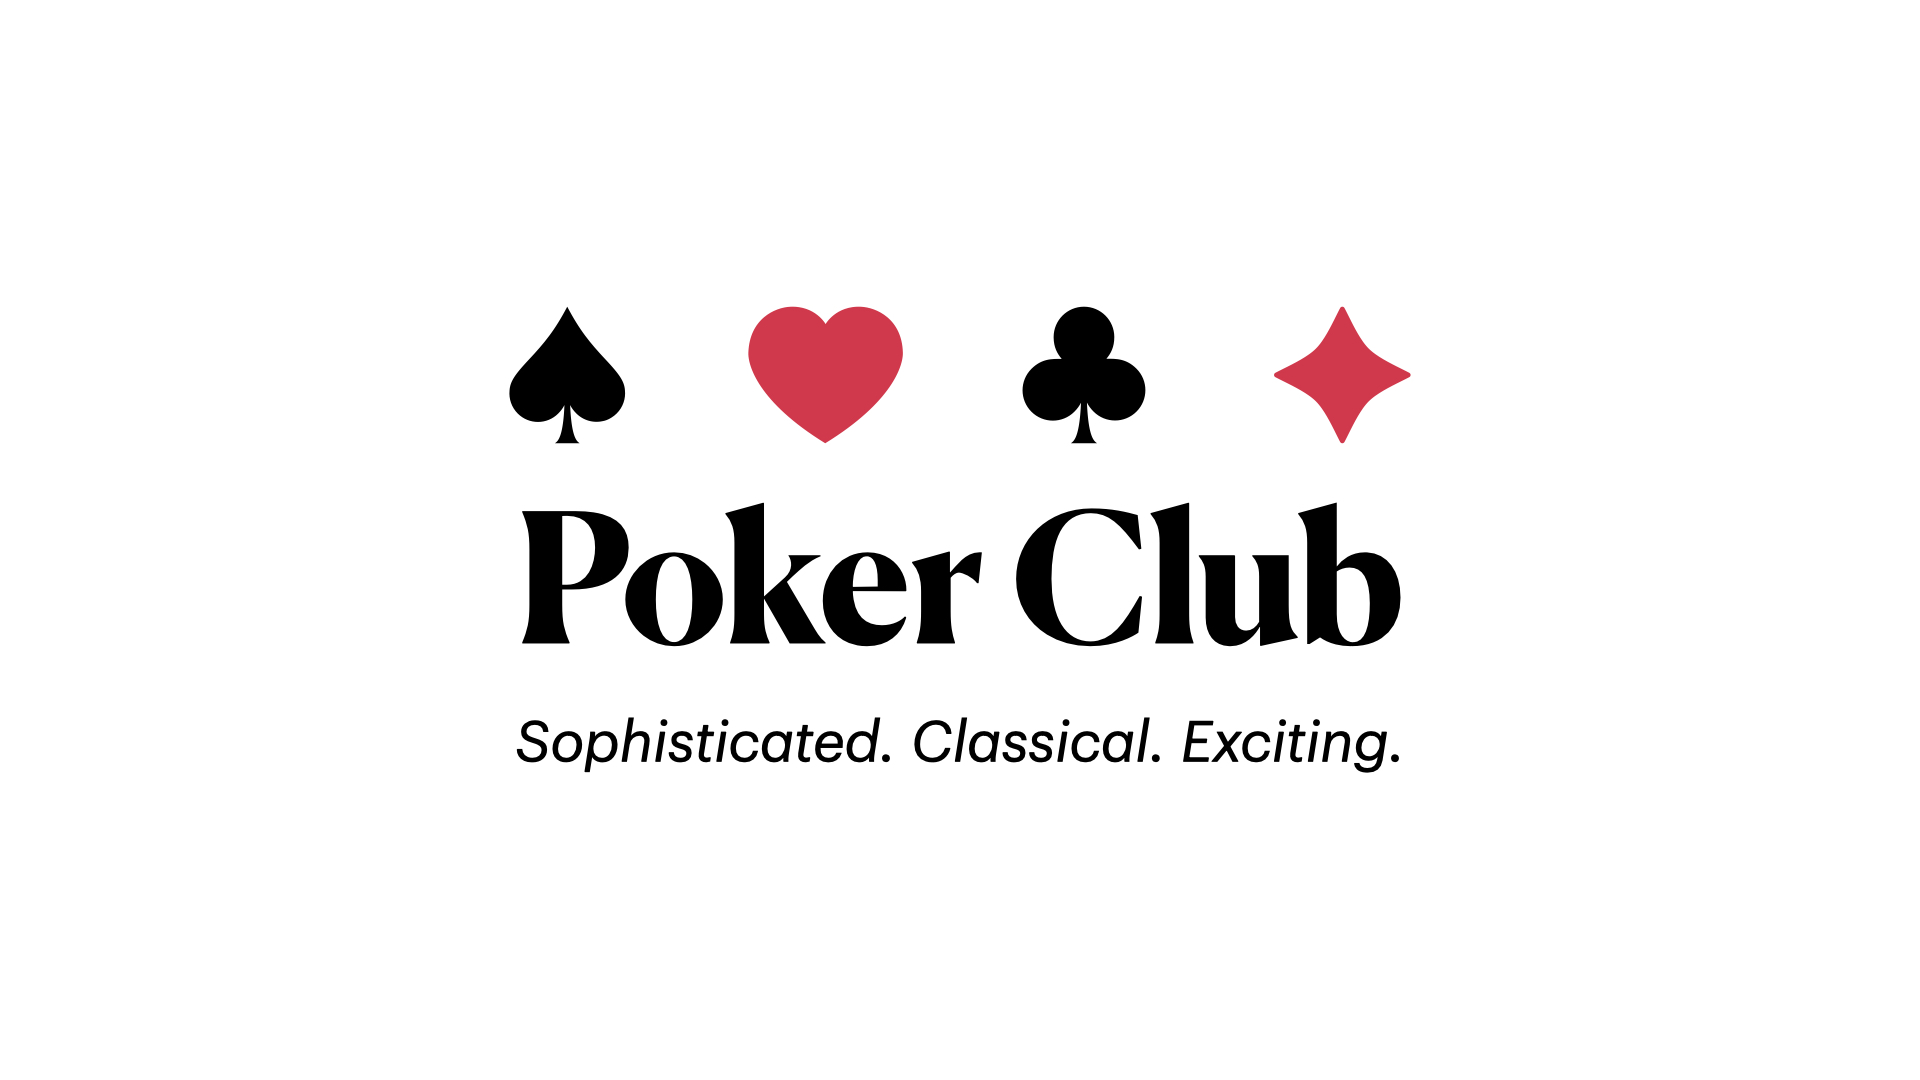 The Poker Club wordmark.